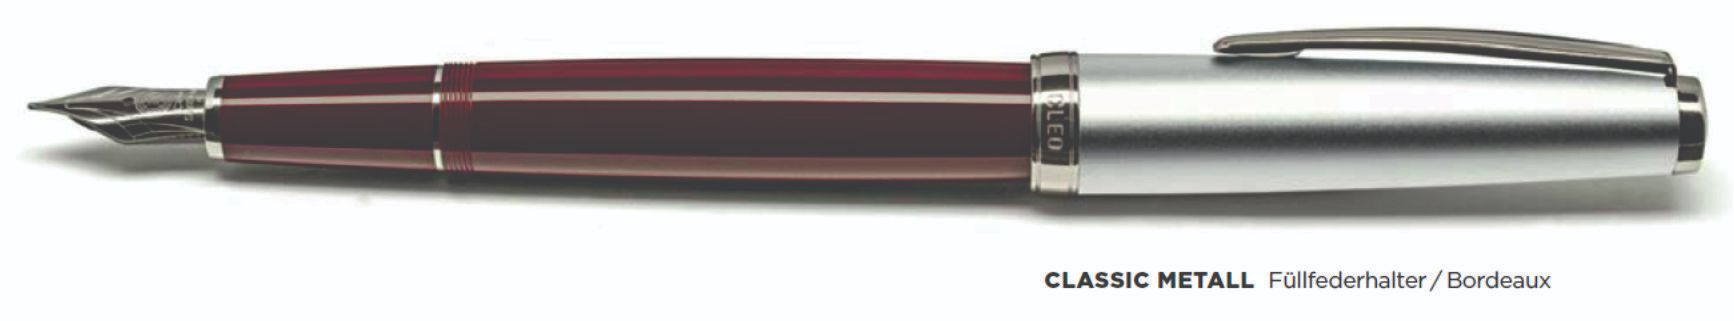 Cleo Pens CLASSIC Metal Fllfederhalter Bordeaux Fountain Pen